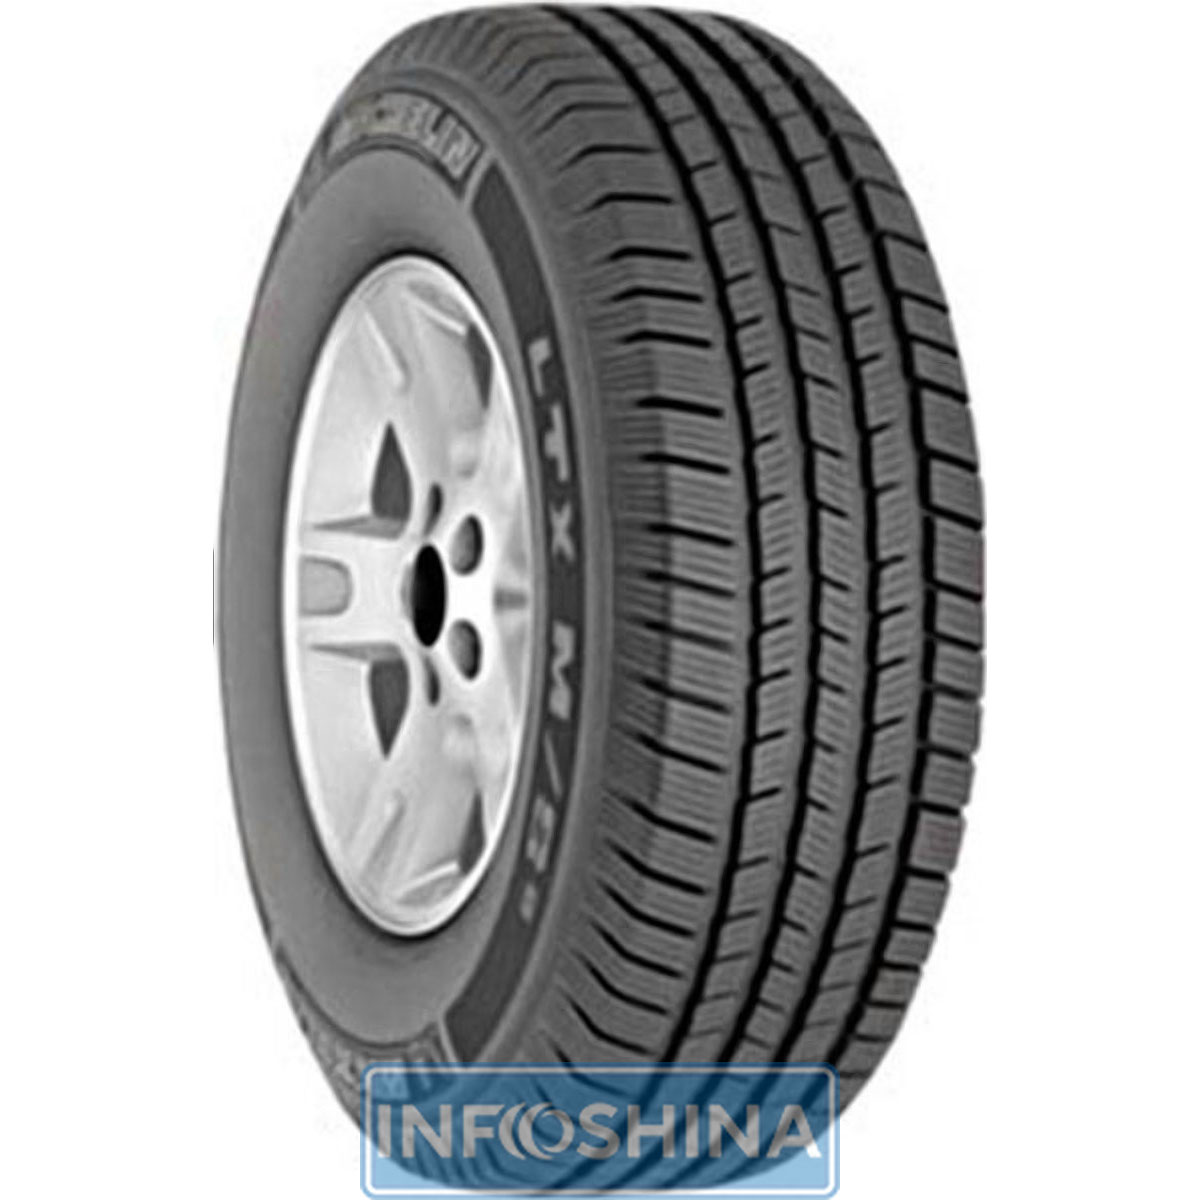 Купить шины Michelin LTX M/S2 265/60 R18 109T